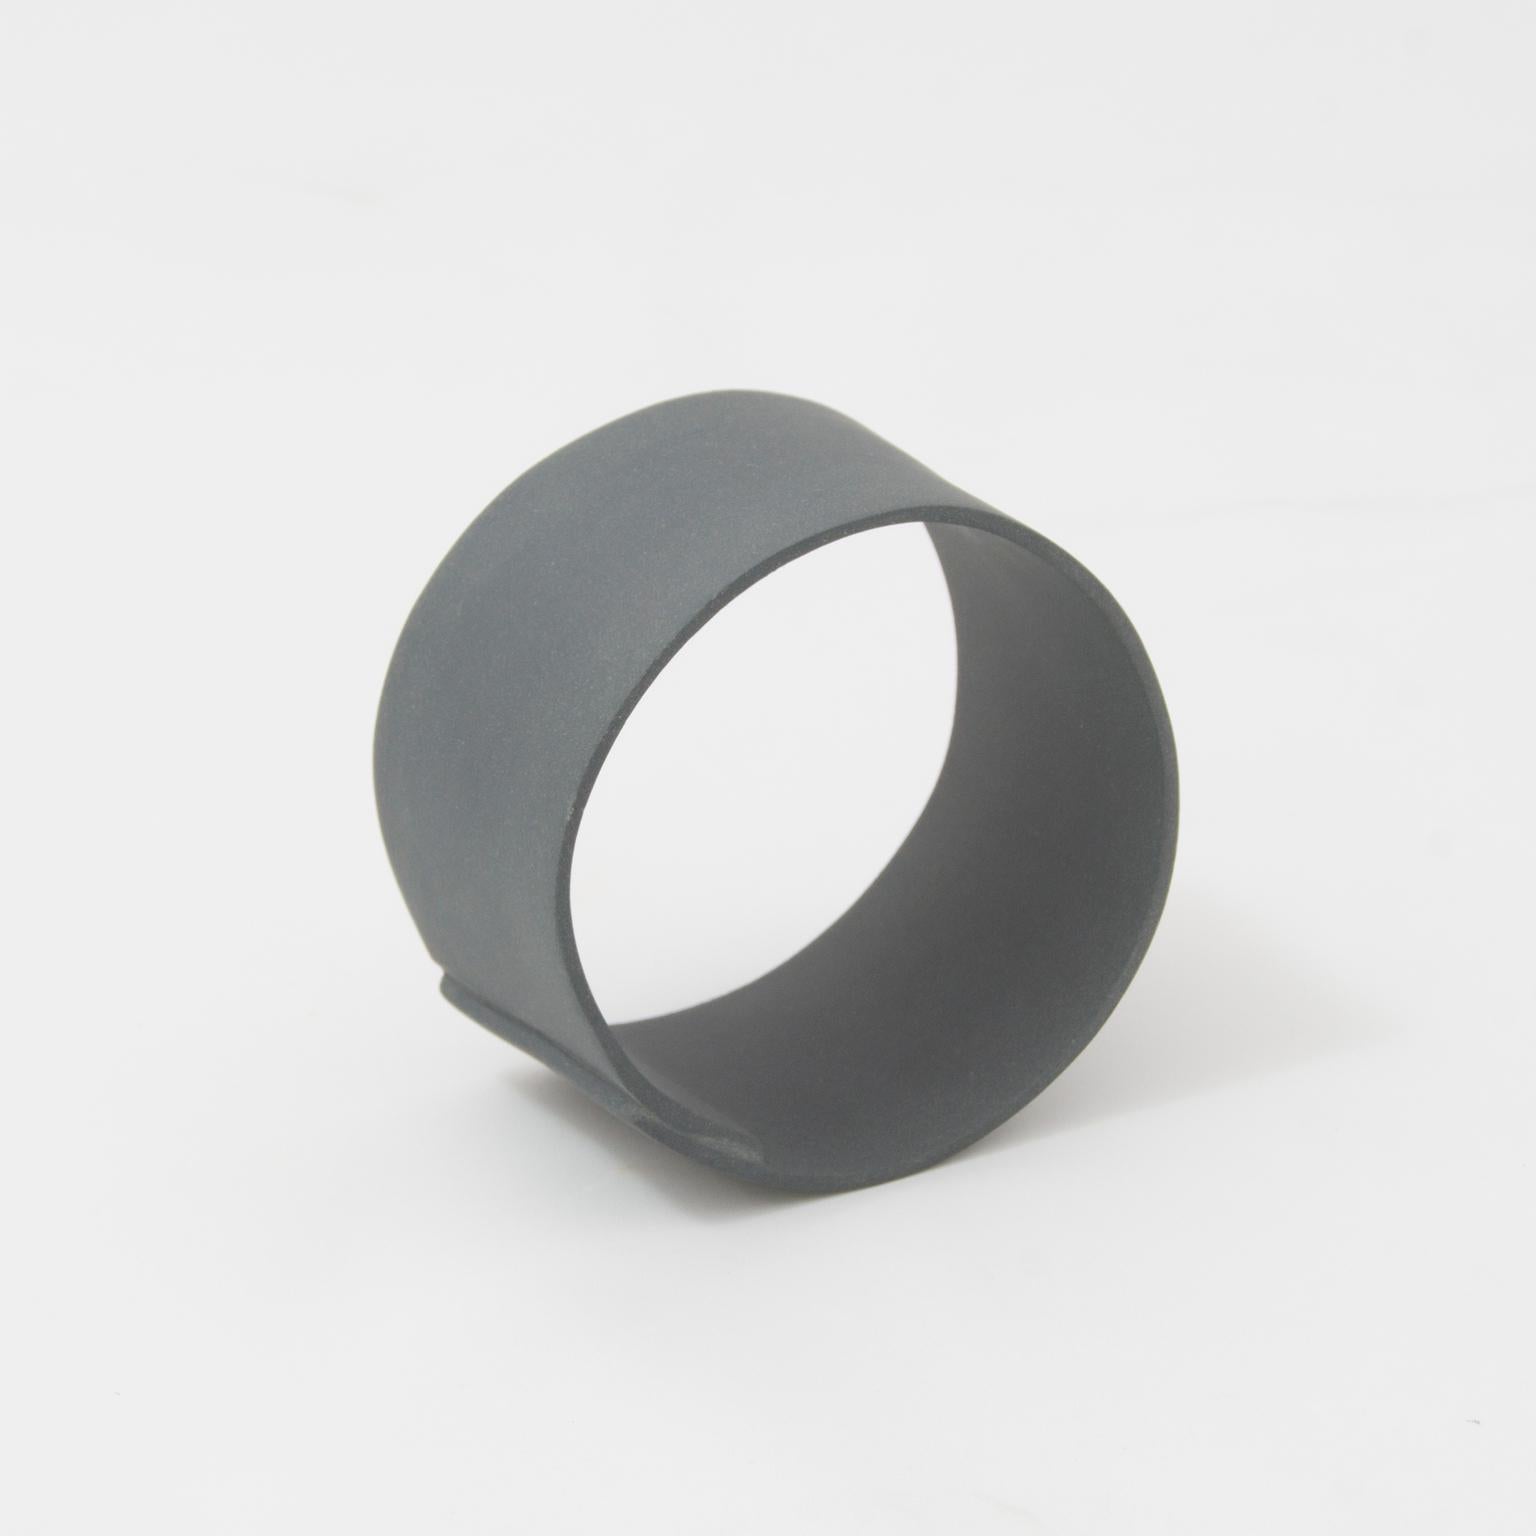 Minimalist Handmade Contemporary Decorative Object Matte Black Porcelain Ring For Sale